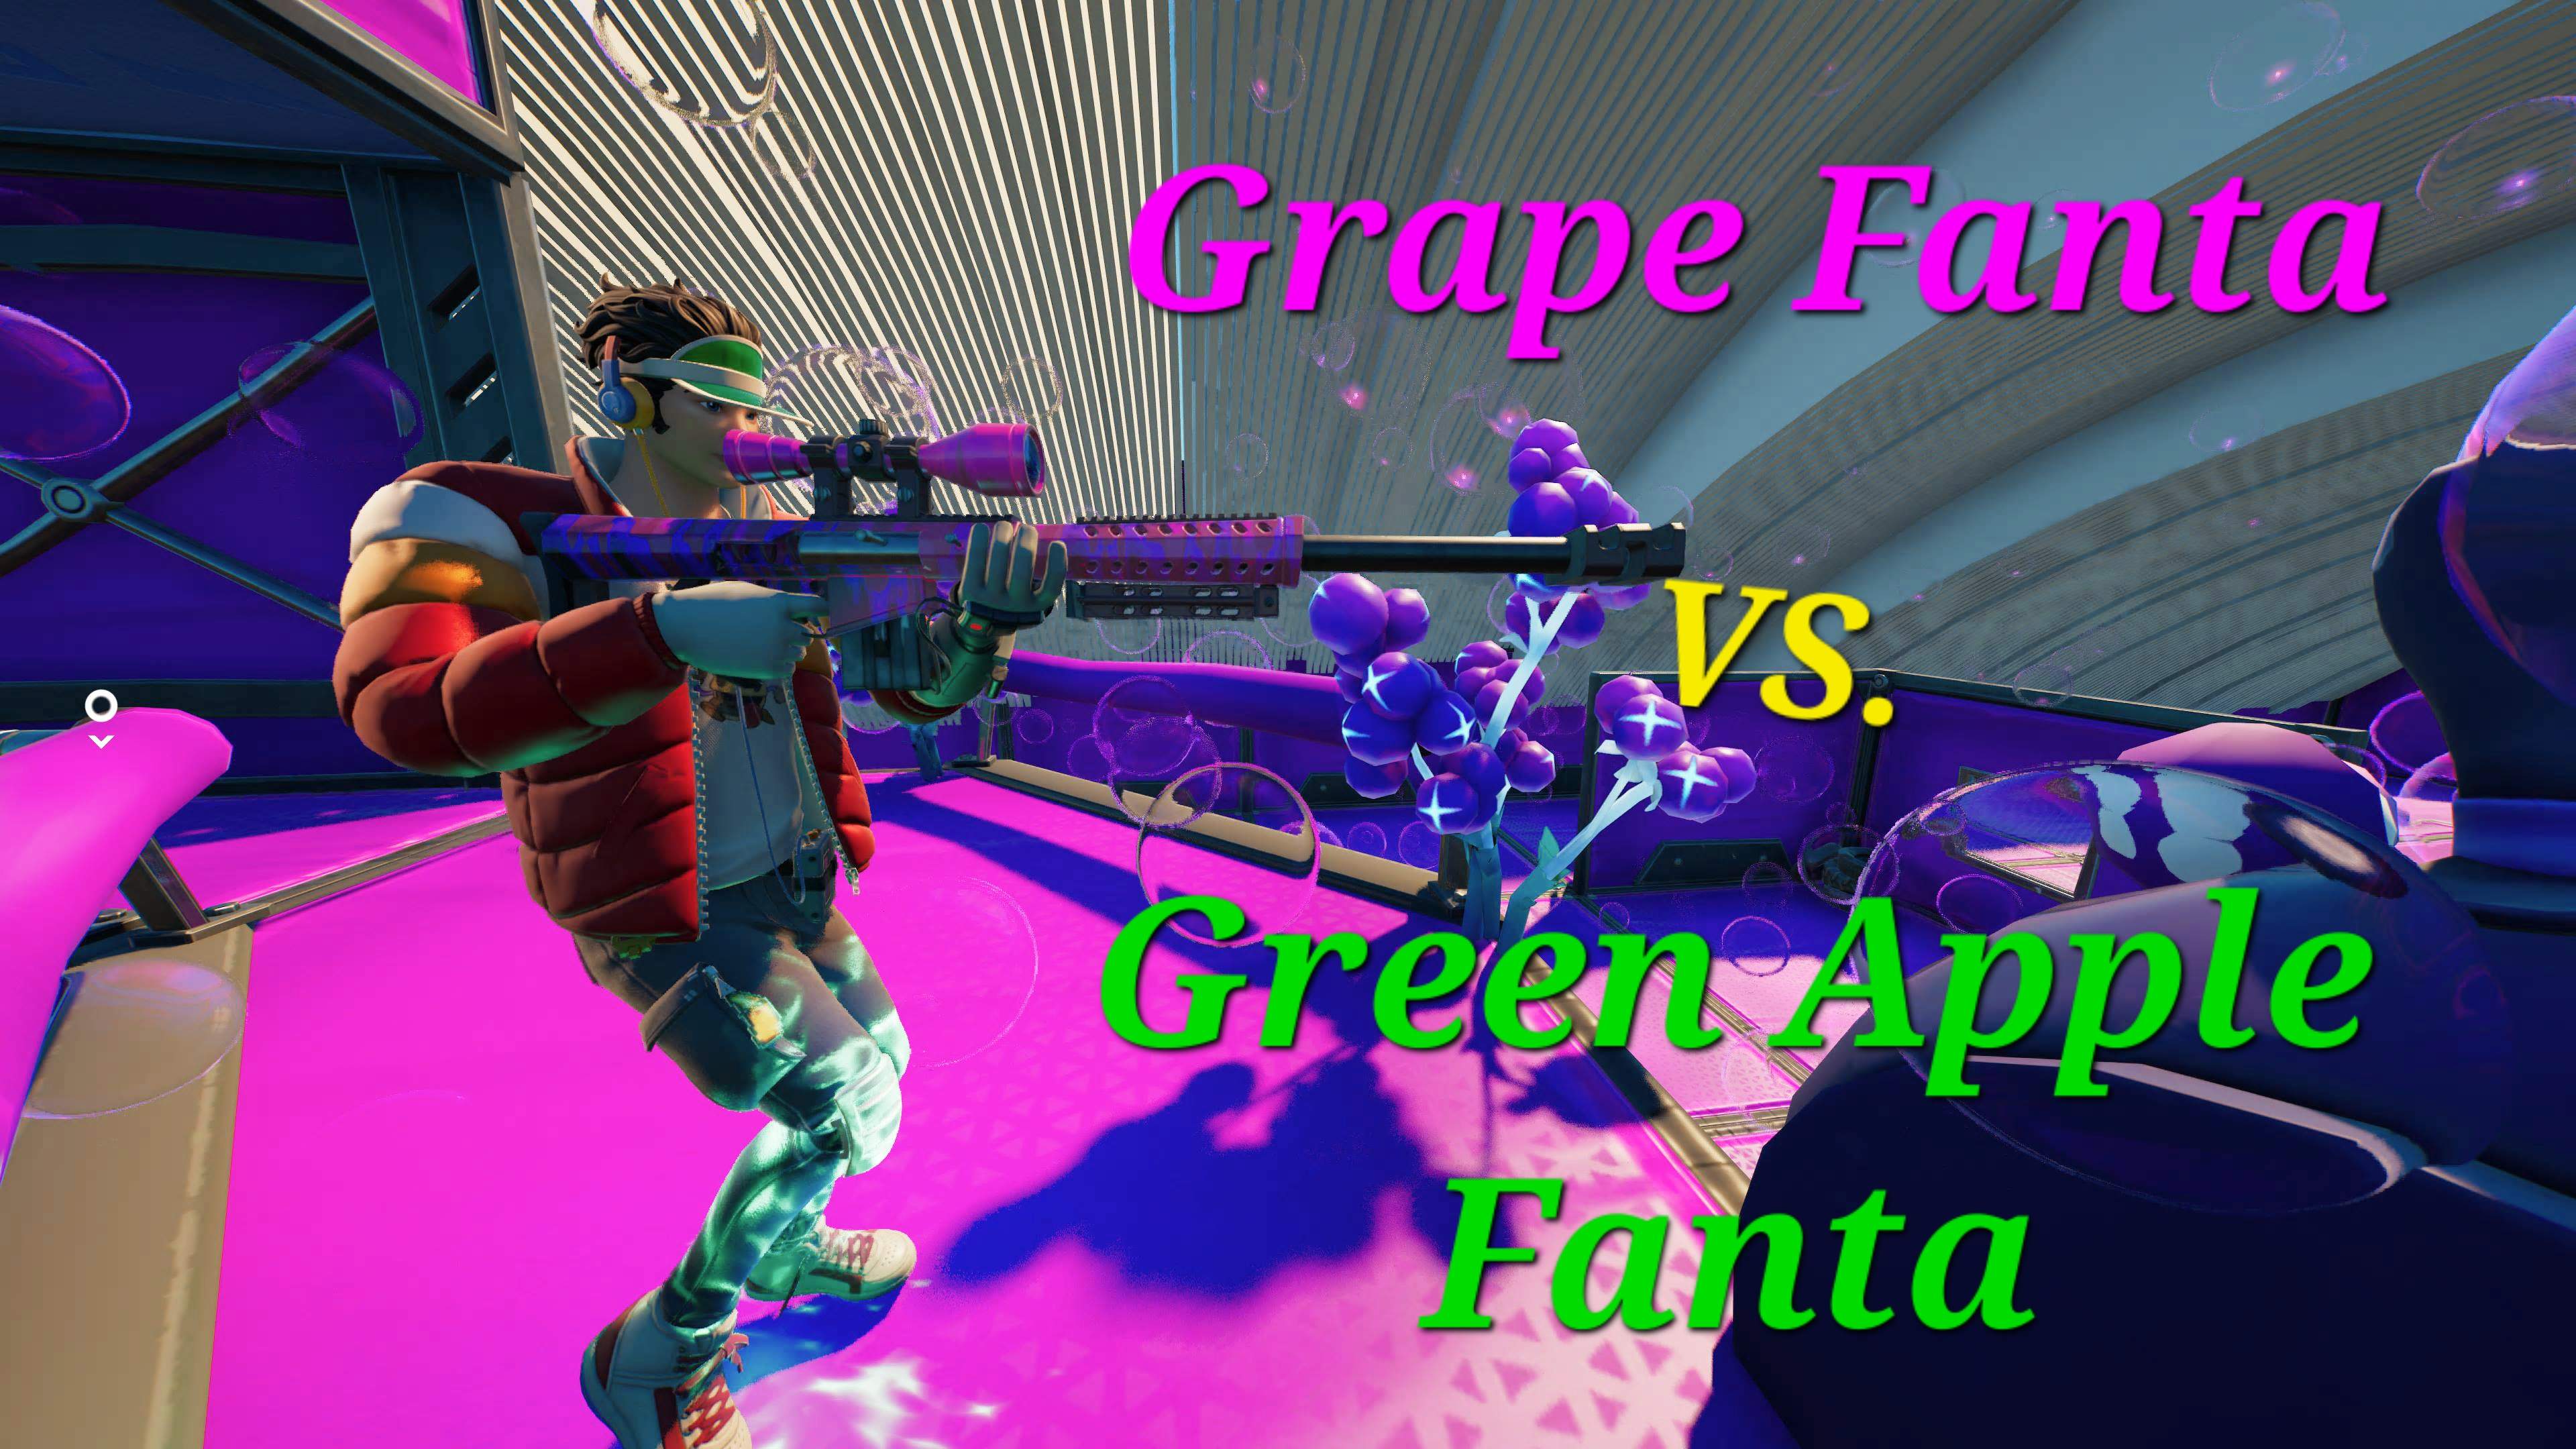 Fps Green Apple Fanta vs. Grape Fanta